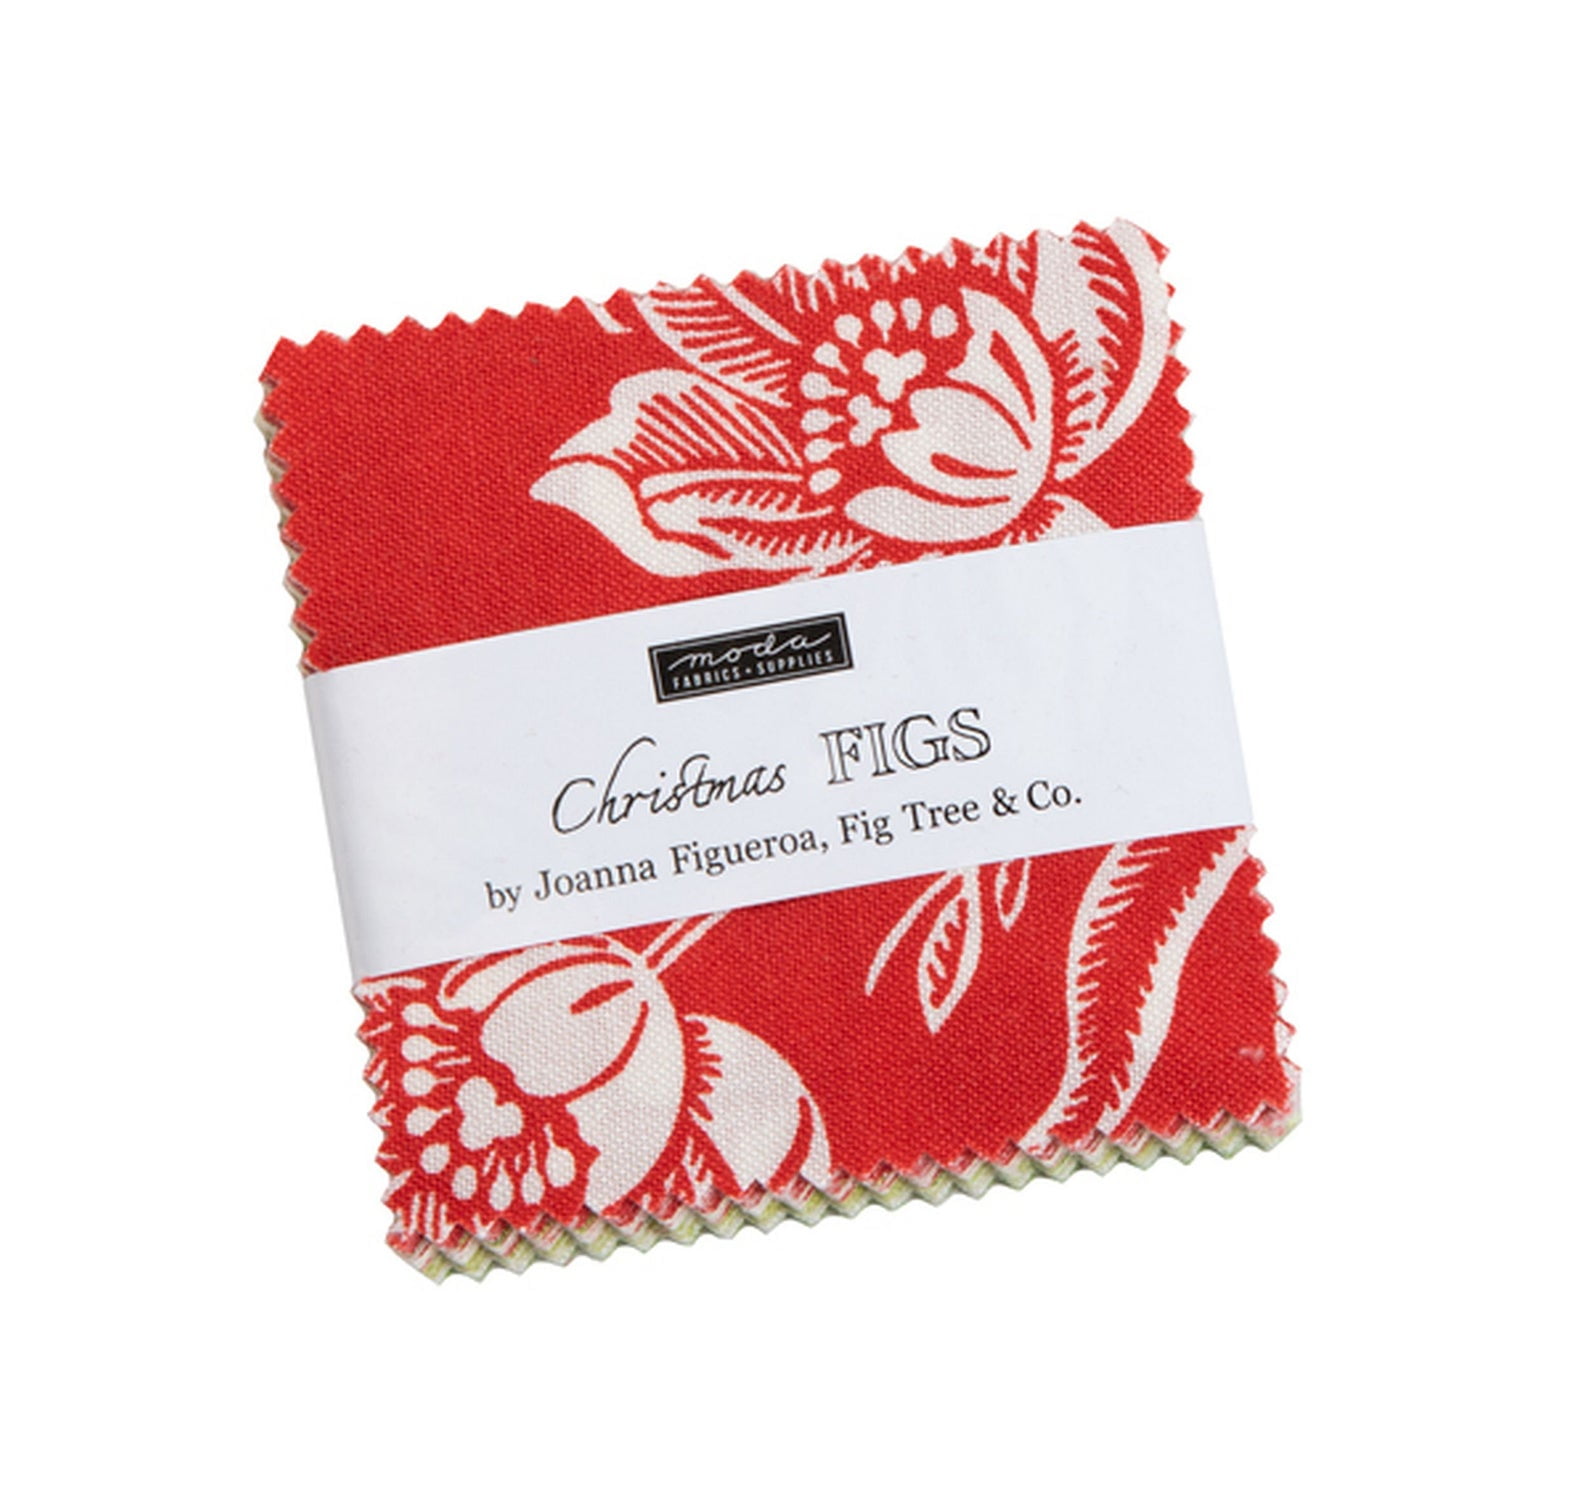 Christmas Figs II Cotton Fabric Charm pack by Joanna Figueroa fig tree for Moda fabrics